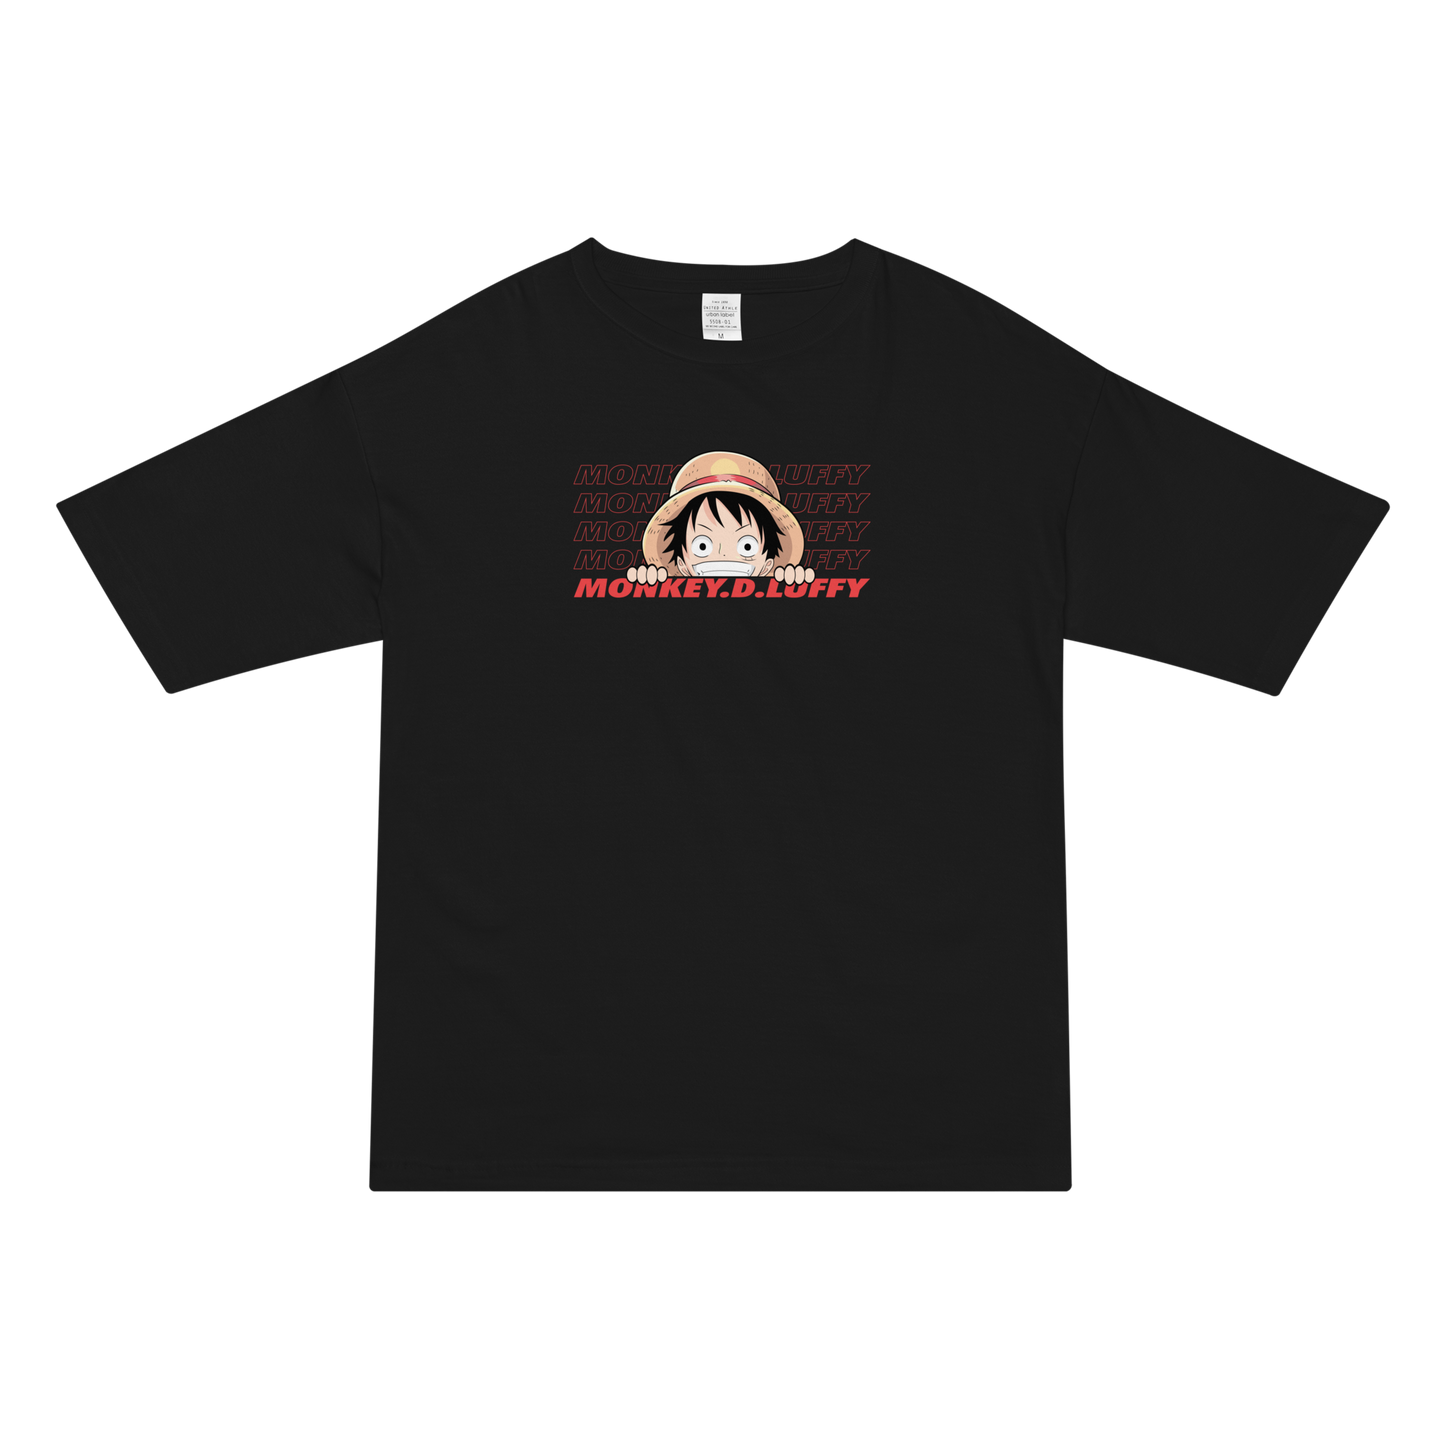 Luffy t-shirt